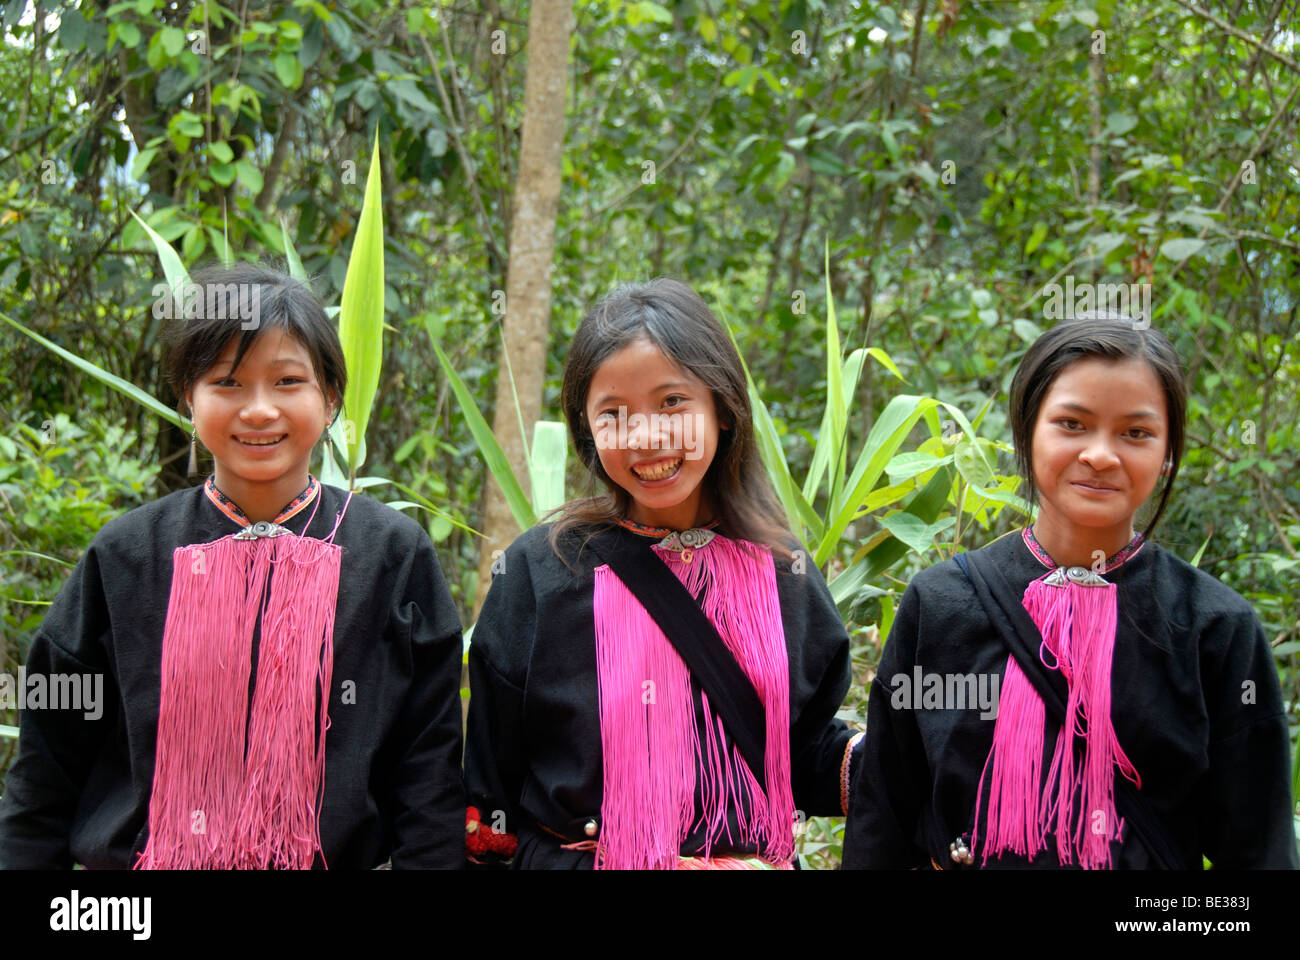 Porträt, Ethnologie, drei lächelnden jungen Frauen der Volksgruppe der Yao, rosa Fäden als Schmuckgeschäfte, Ou Tai, Gnot Ou, Yot Stockfoto